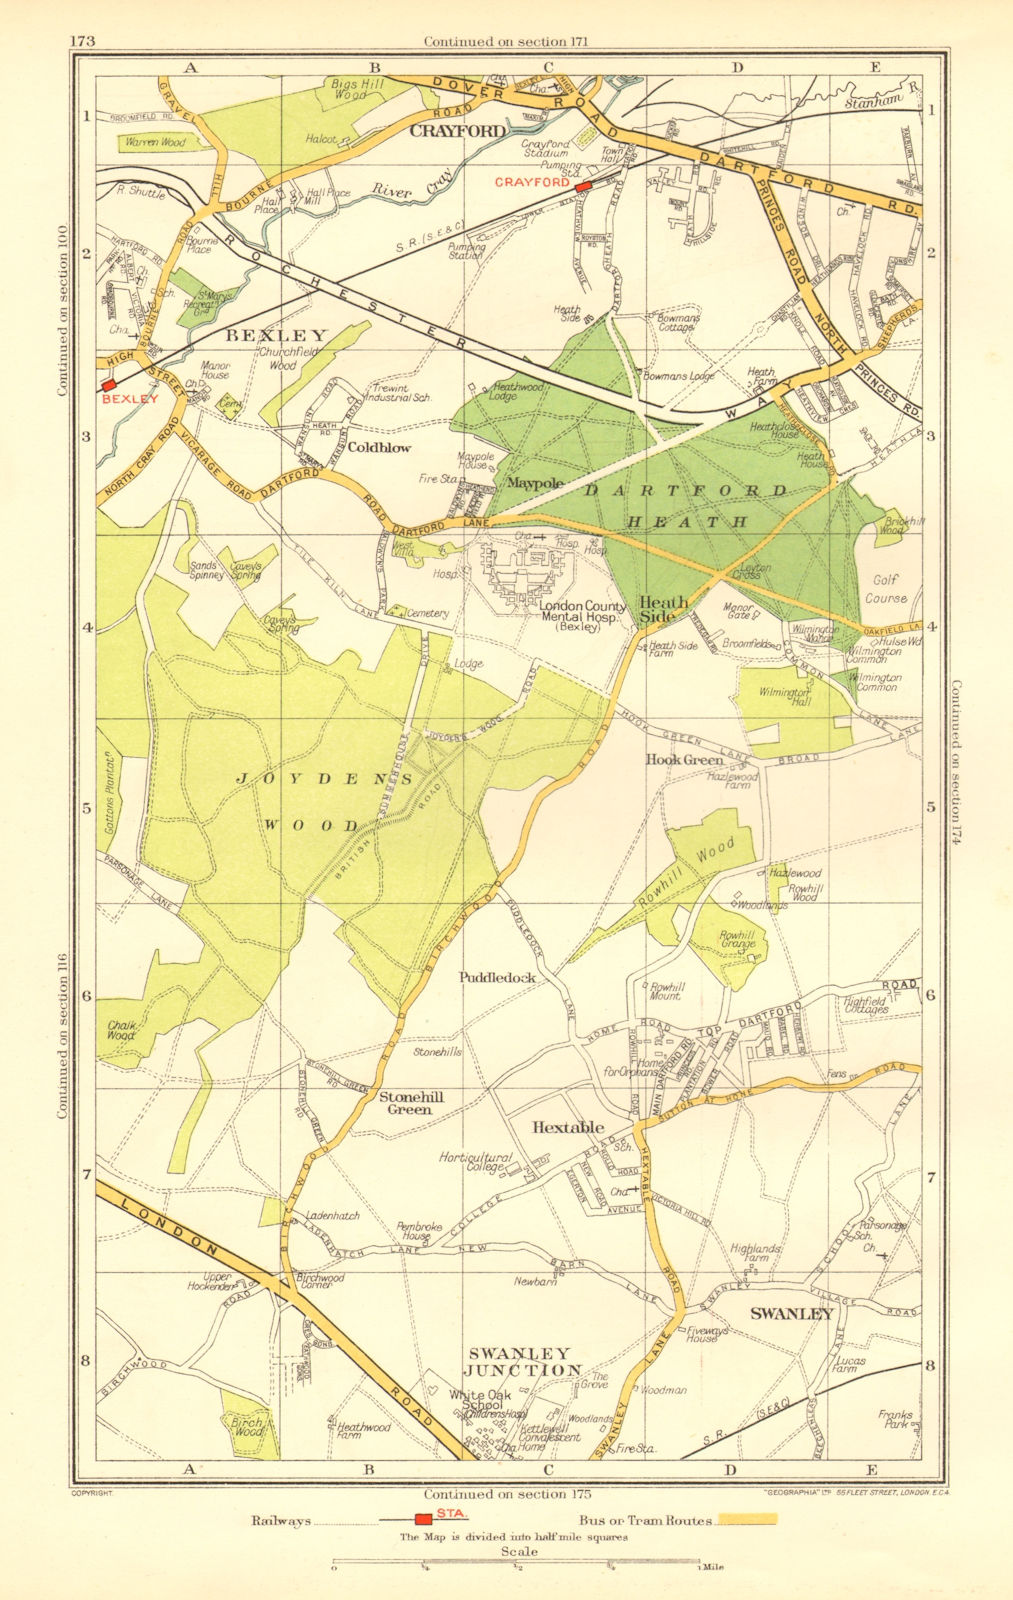 DARTFORD. Crayford Hextable Old Bexley Swanley Hook Green White Oak 1937 map